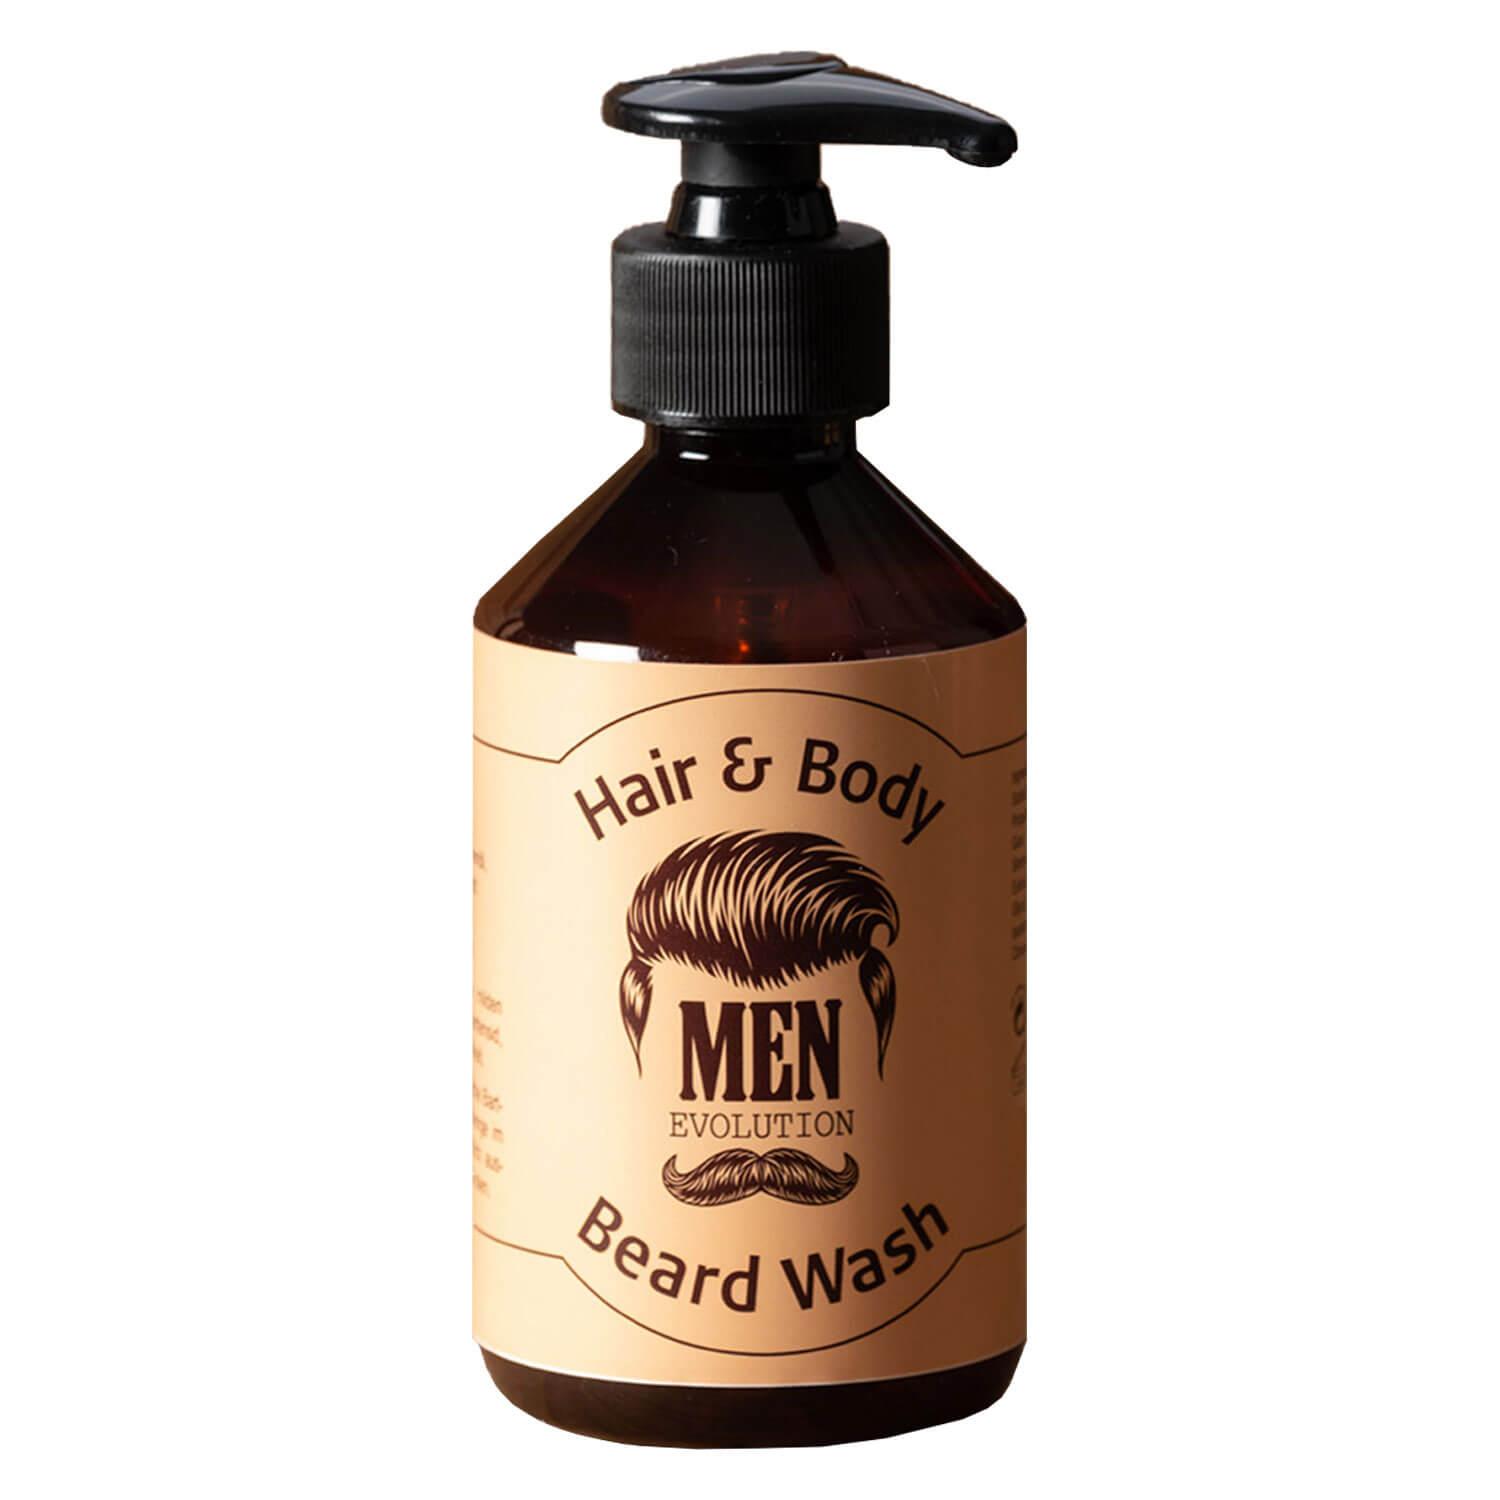 MEN Evolution - Hair & Body Beard Wash